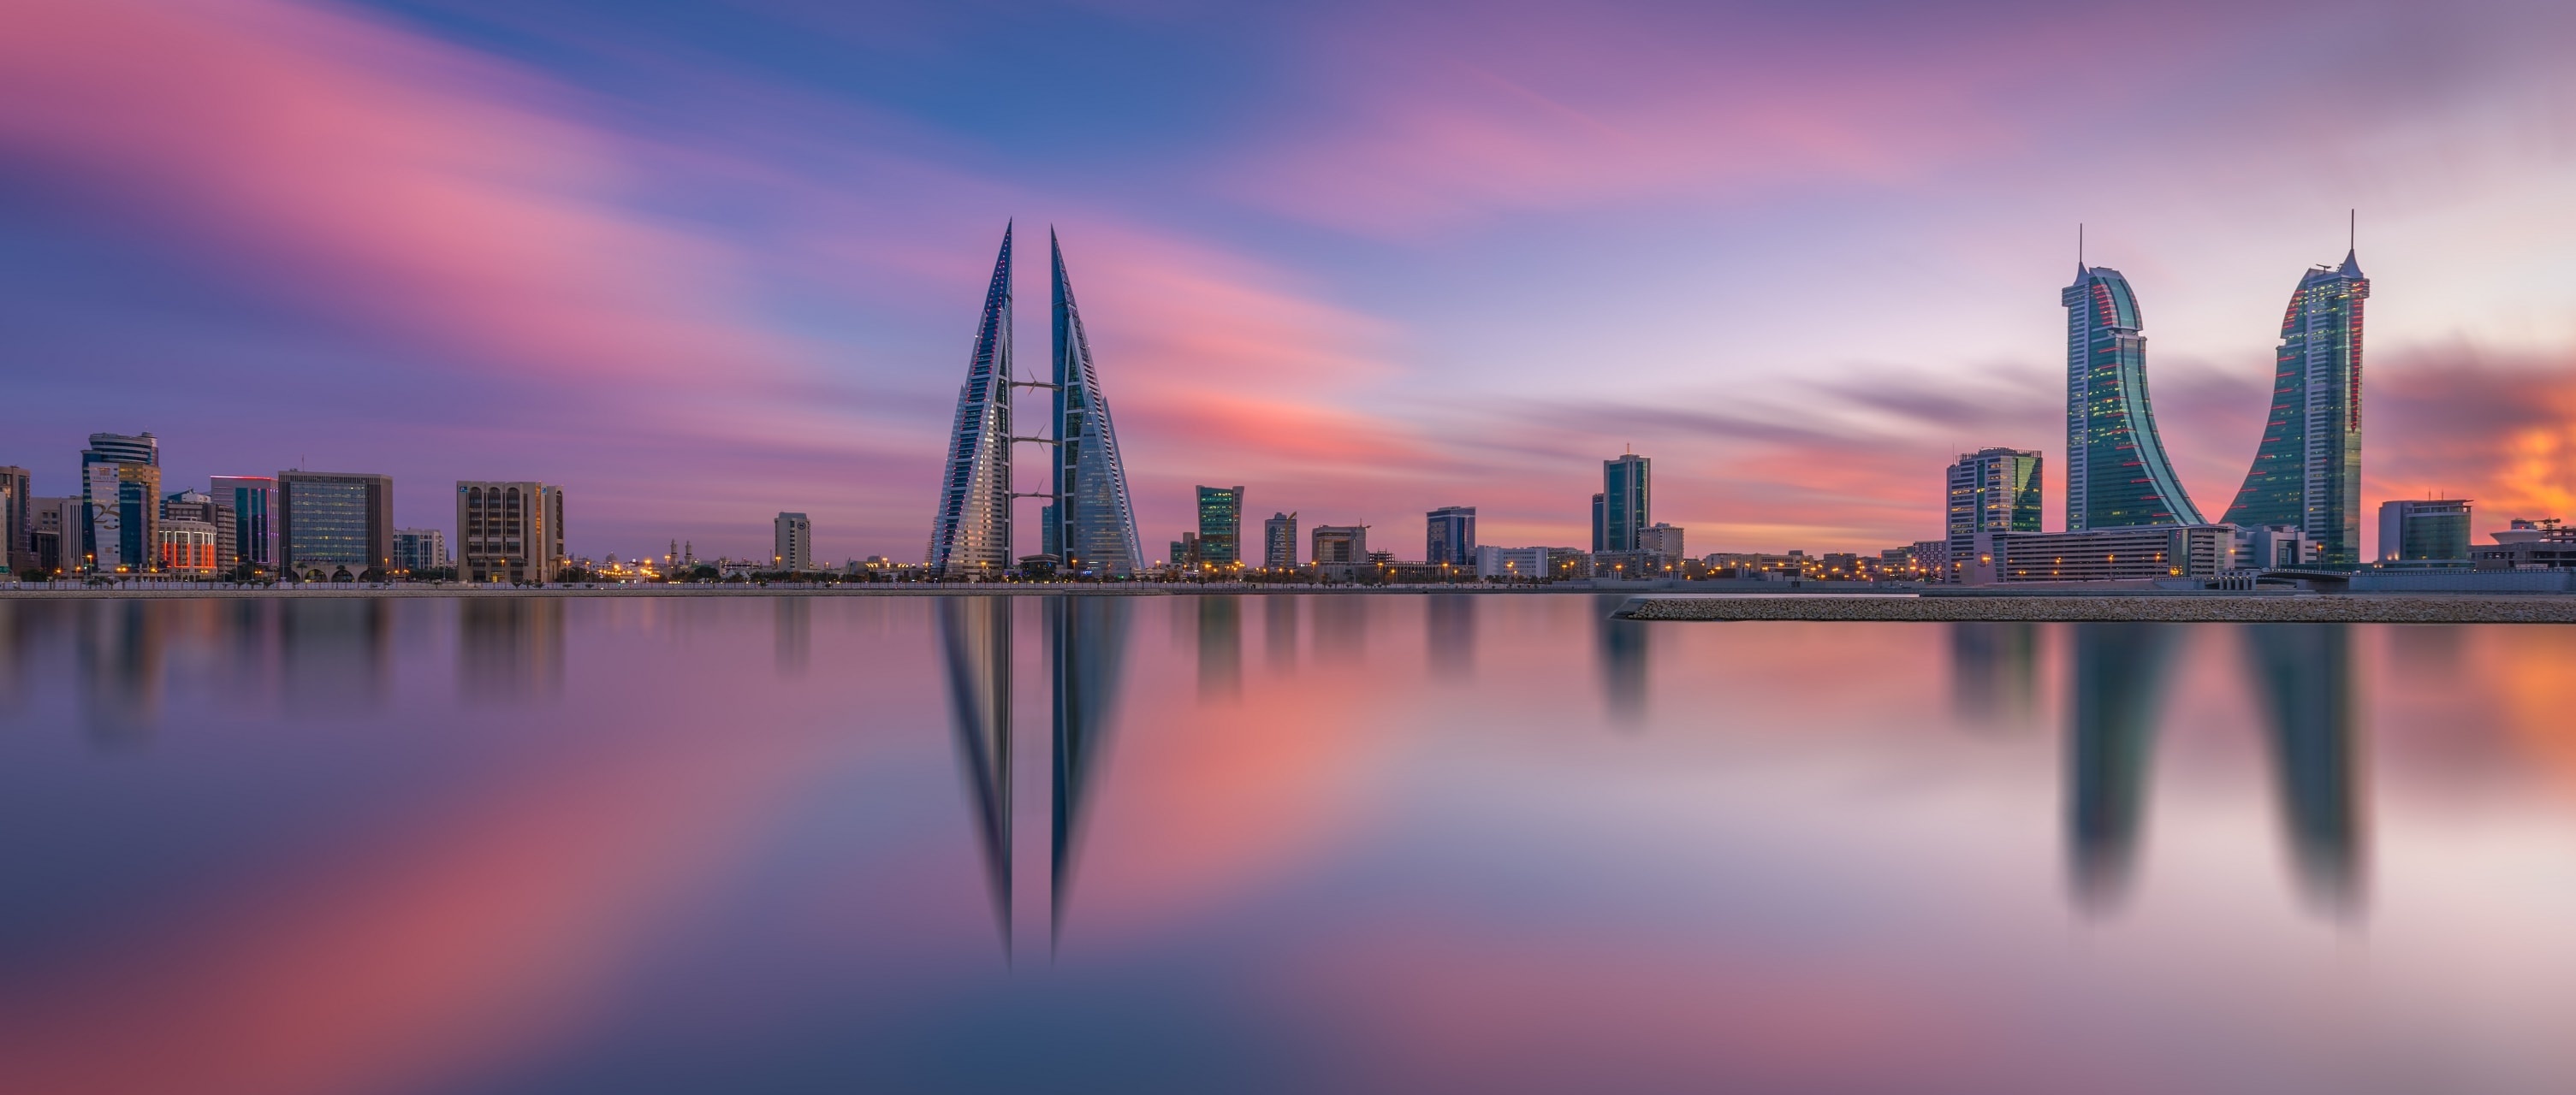 Bahrain, Top 10 attractions, Urlaubsguru, Travel, 3010x1280 Dual Screen Desktop